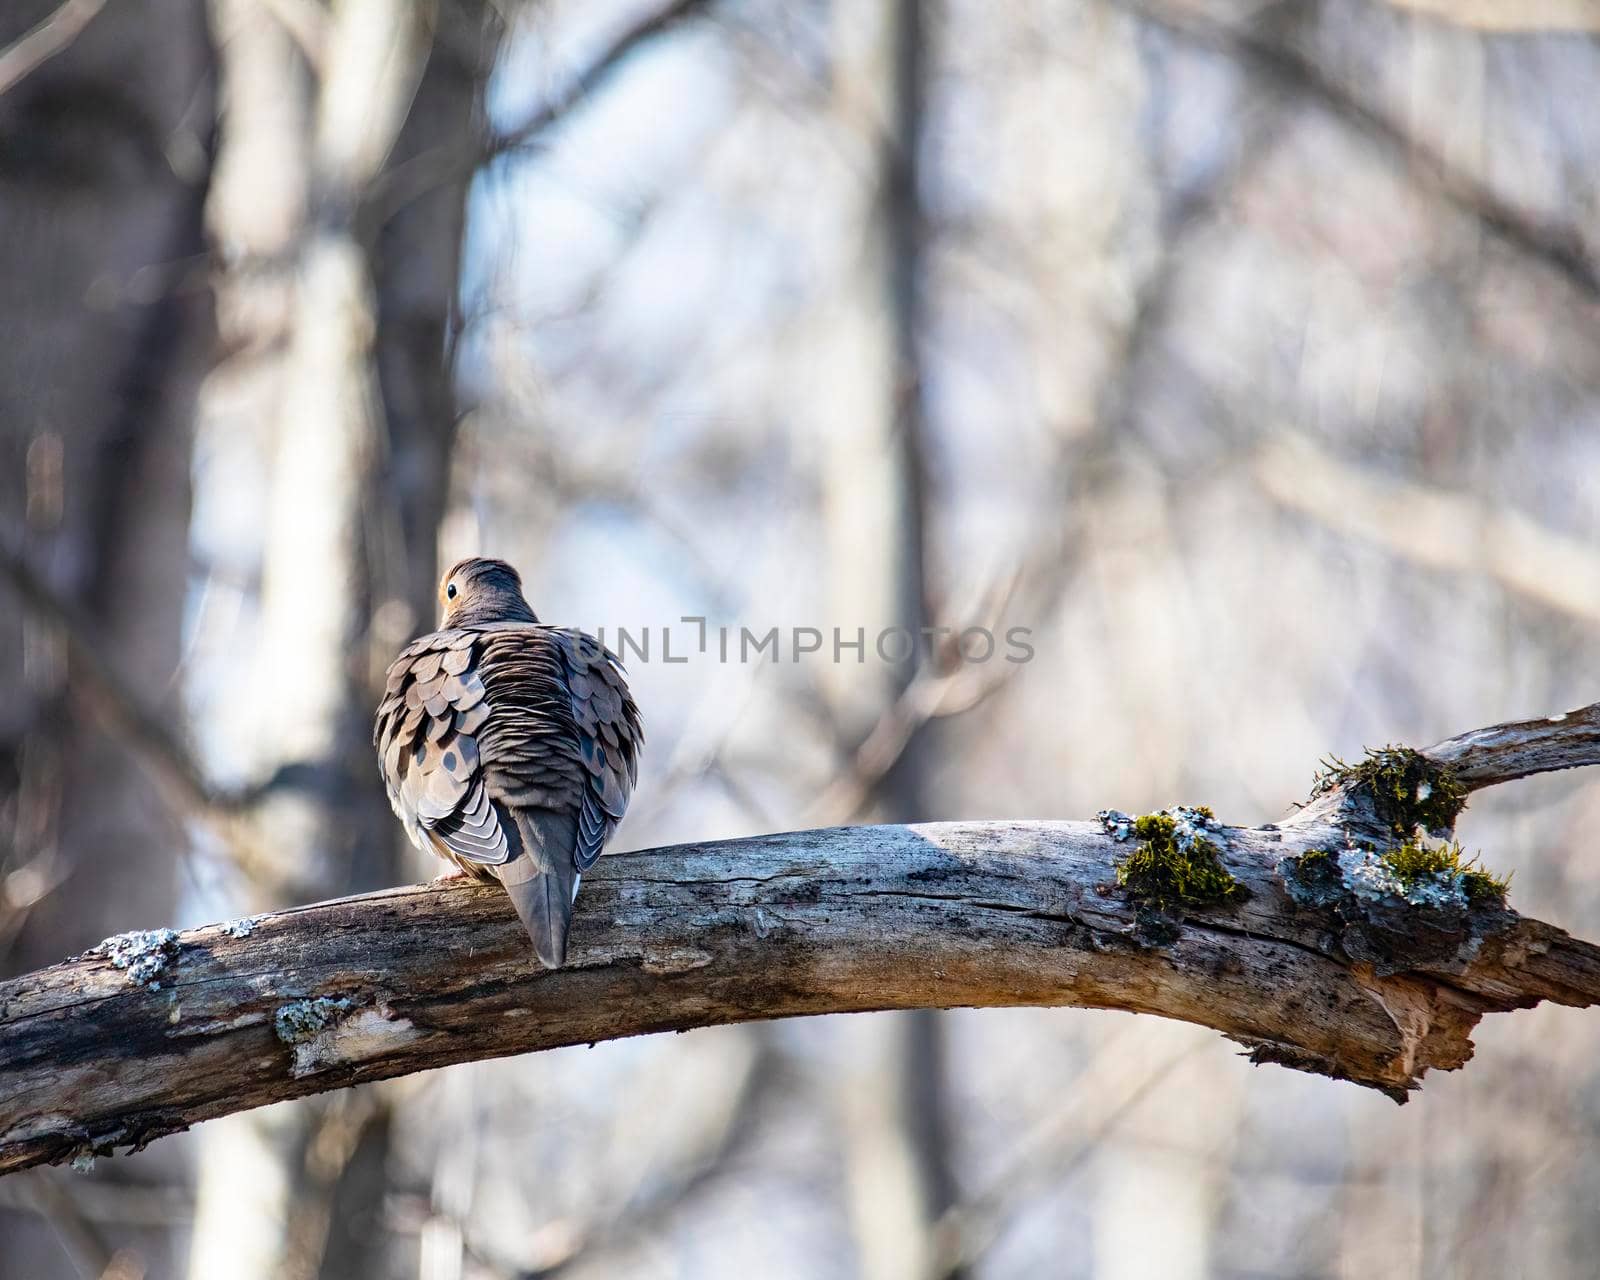 Ruffled Mourning Dove on Tree Limb by CharlieFloyd